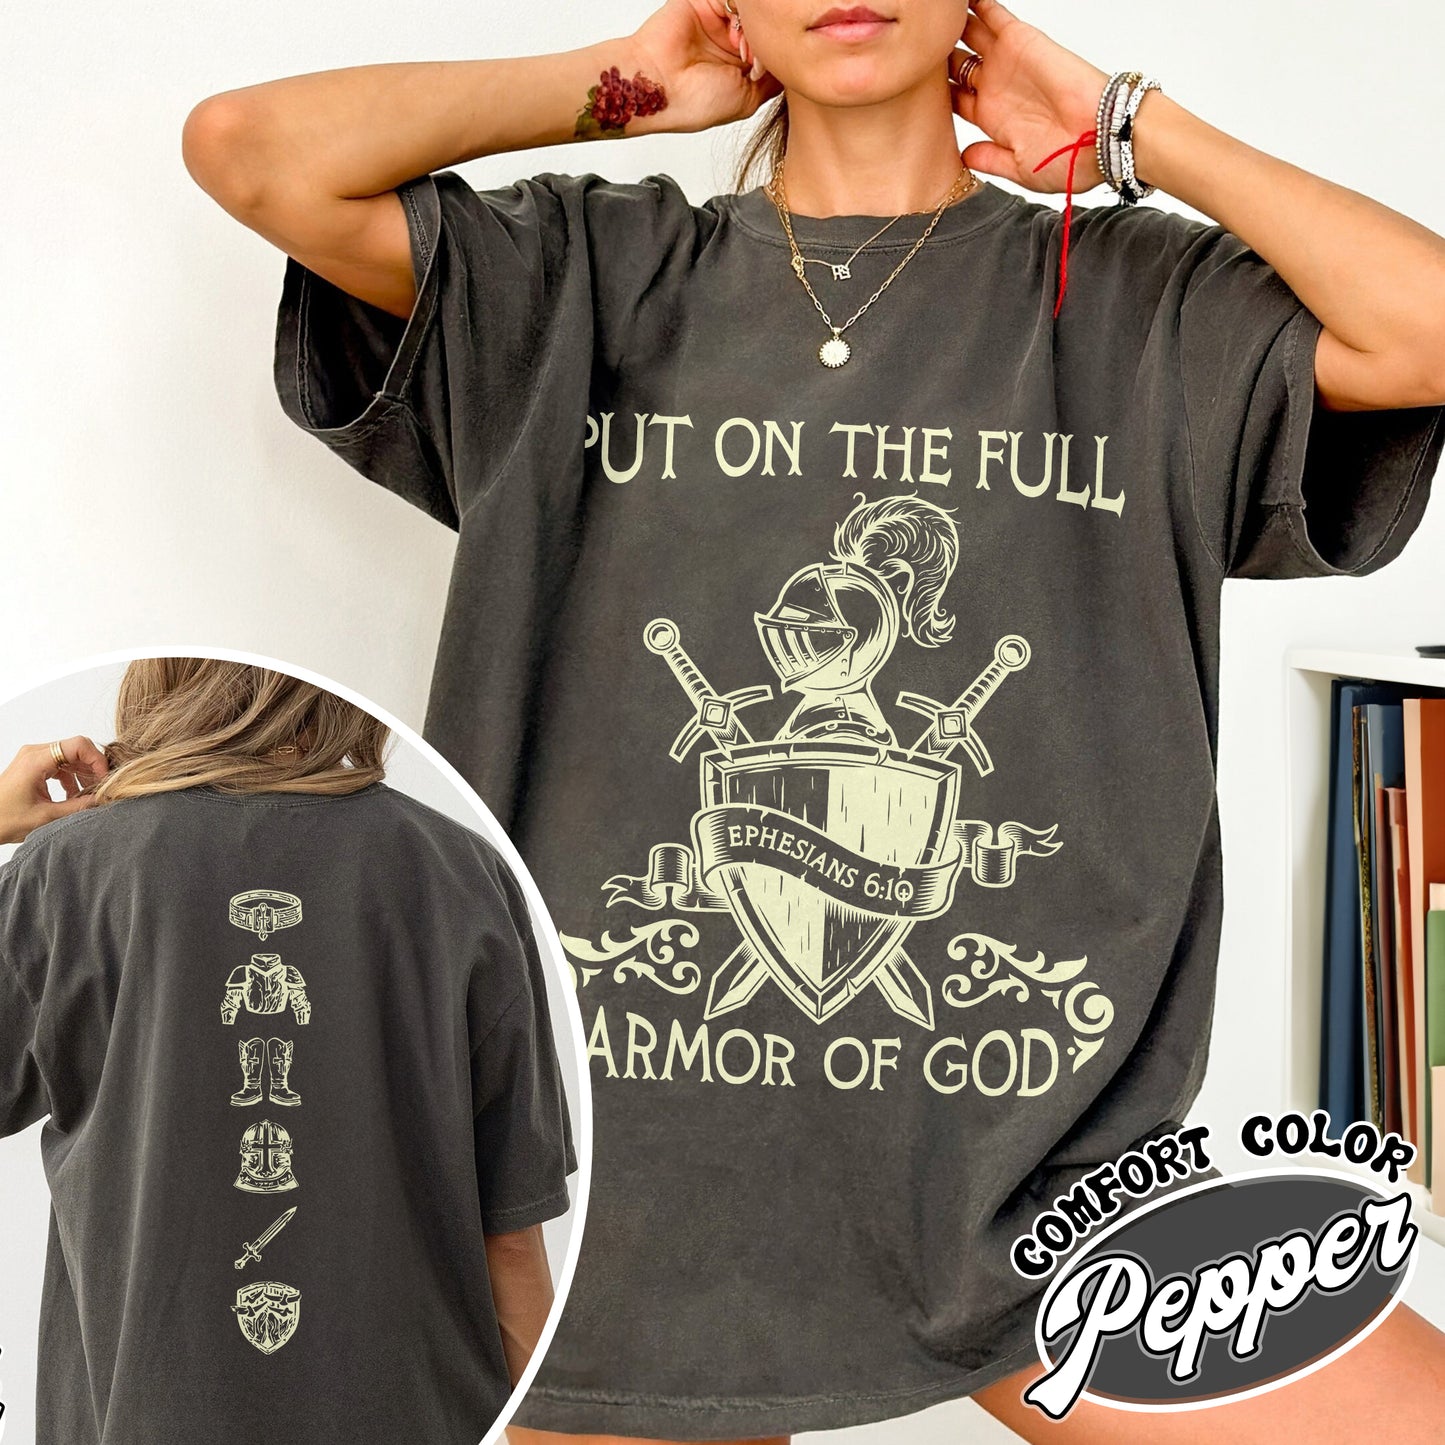 Put On the Full Armor of God Comfort Color Shirt, Armor of God Shirt, Armor of God Shirt, Christian Shirts, Christian Gift, Jesus Shirt